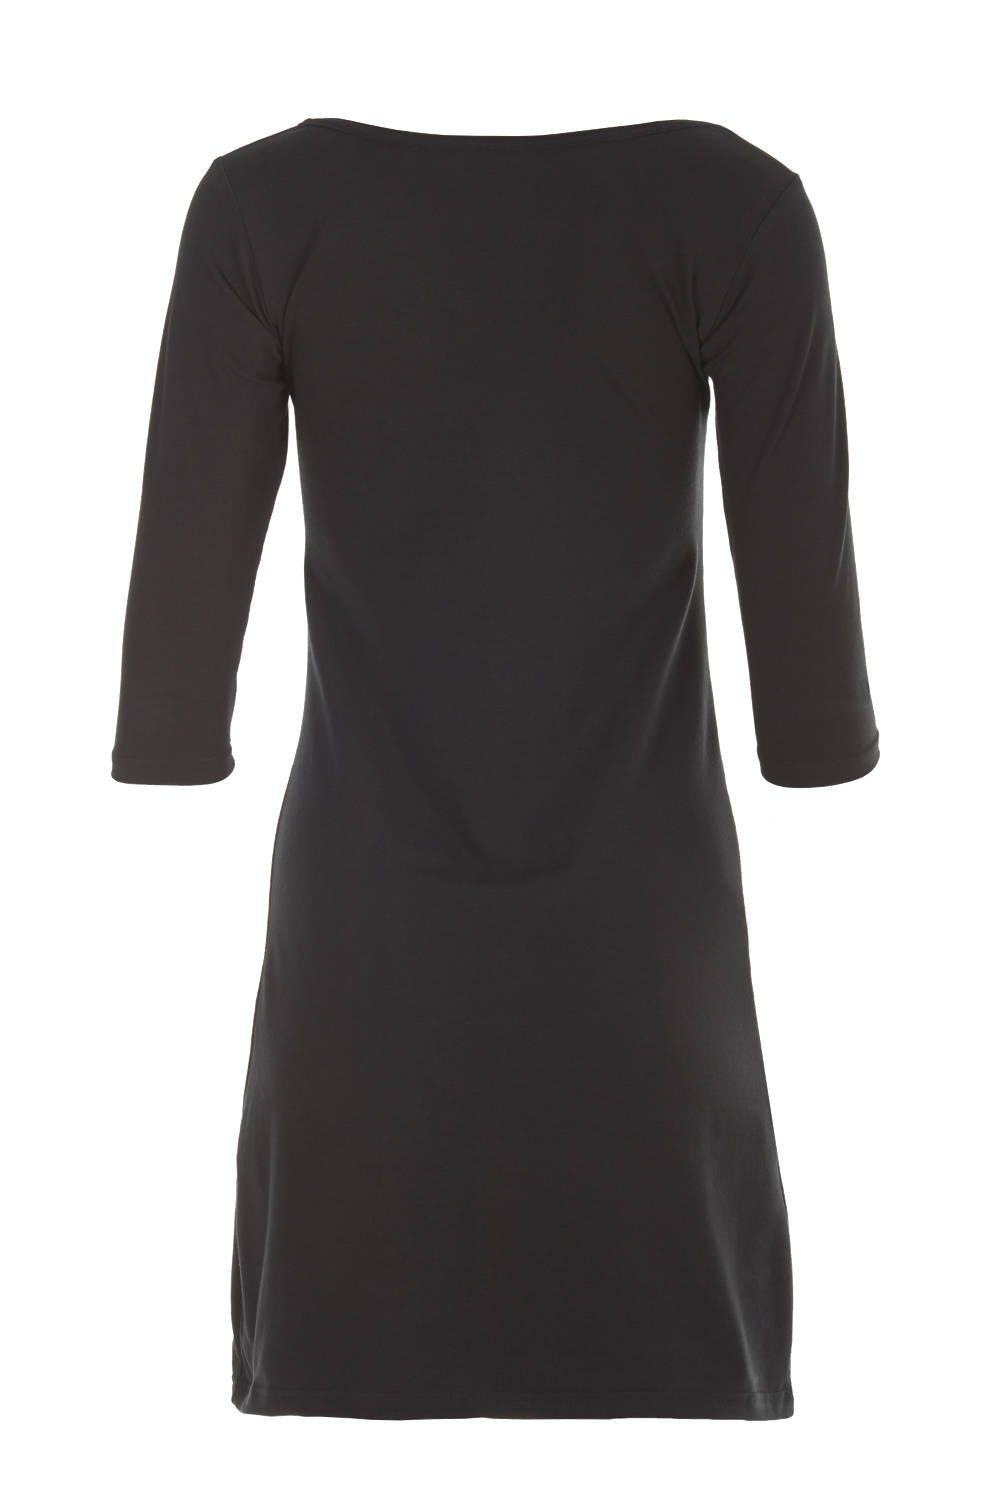 Winshape A-Linien-Kleid WK2 3/4-Arm schwarz